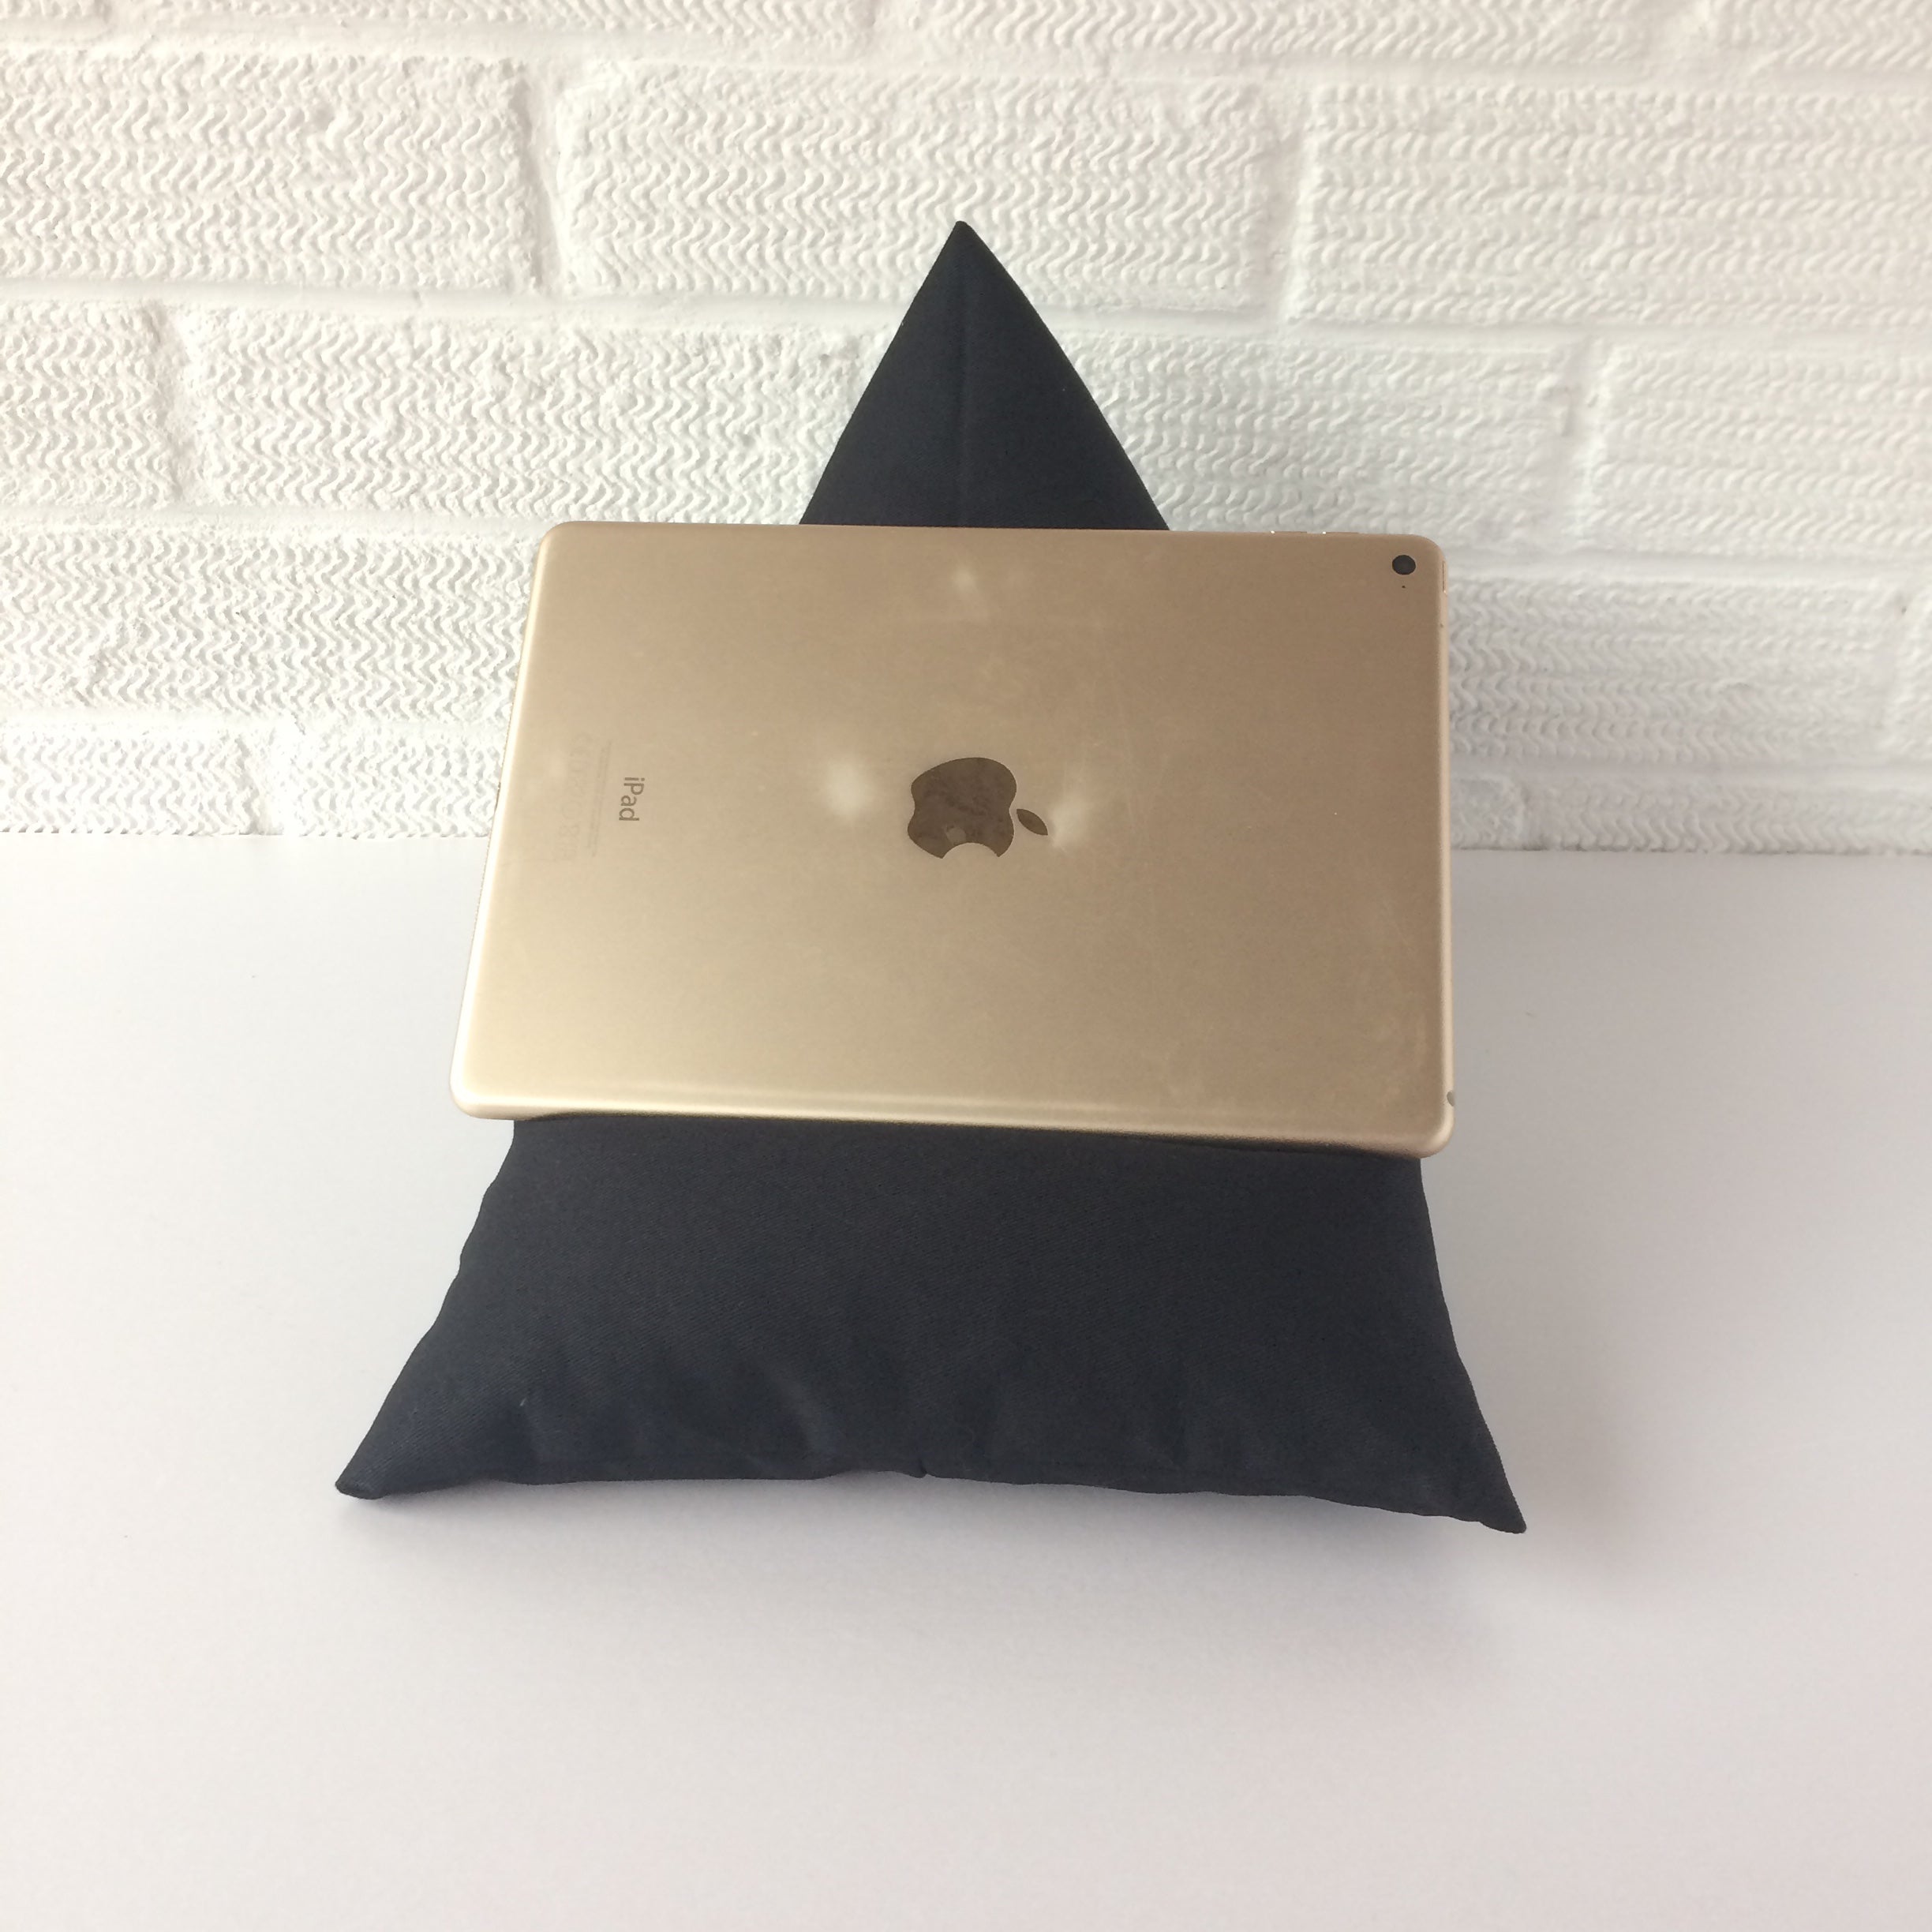 Black Plain Tablet or iPad Holder,  Bean Bag Cushion